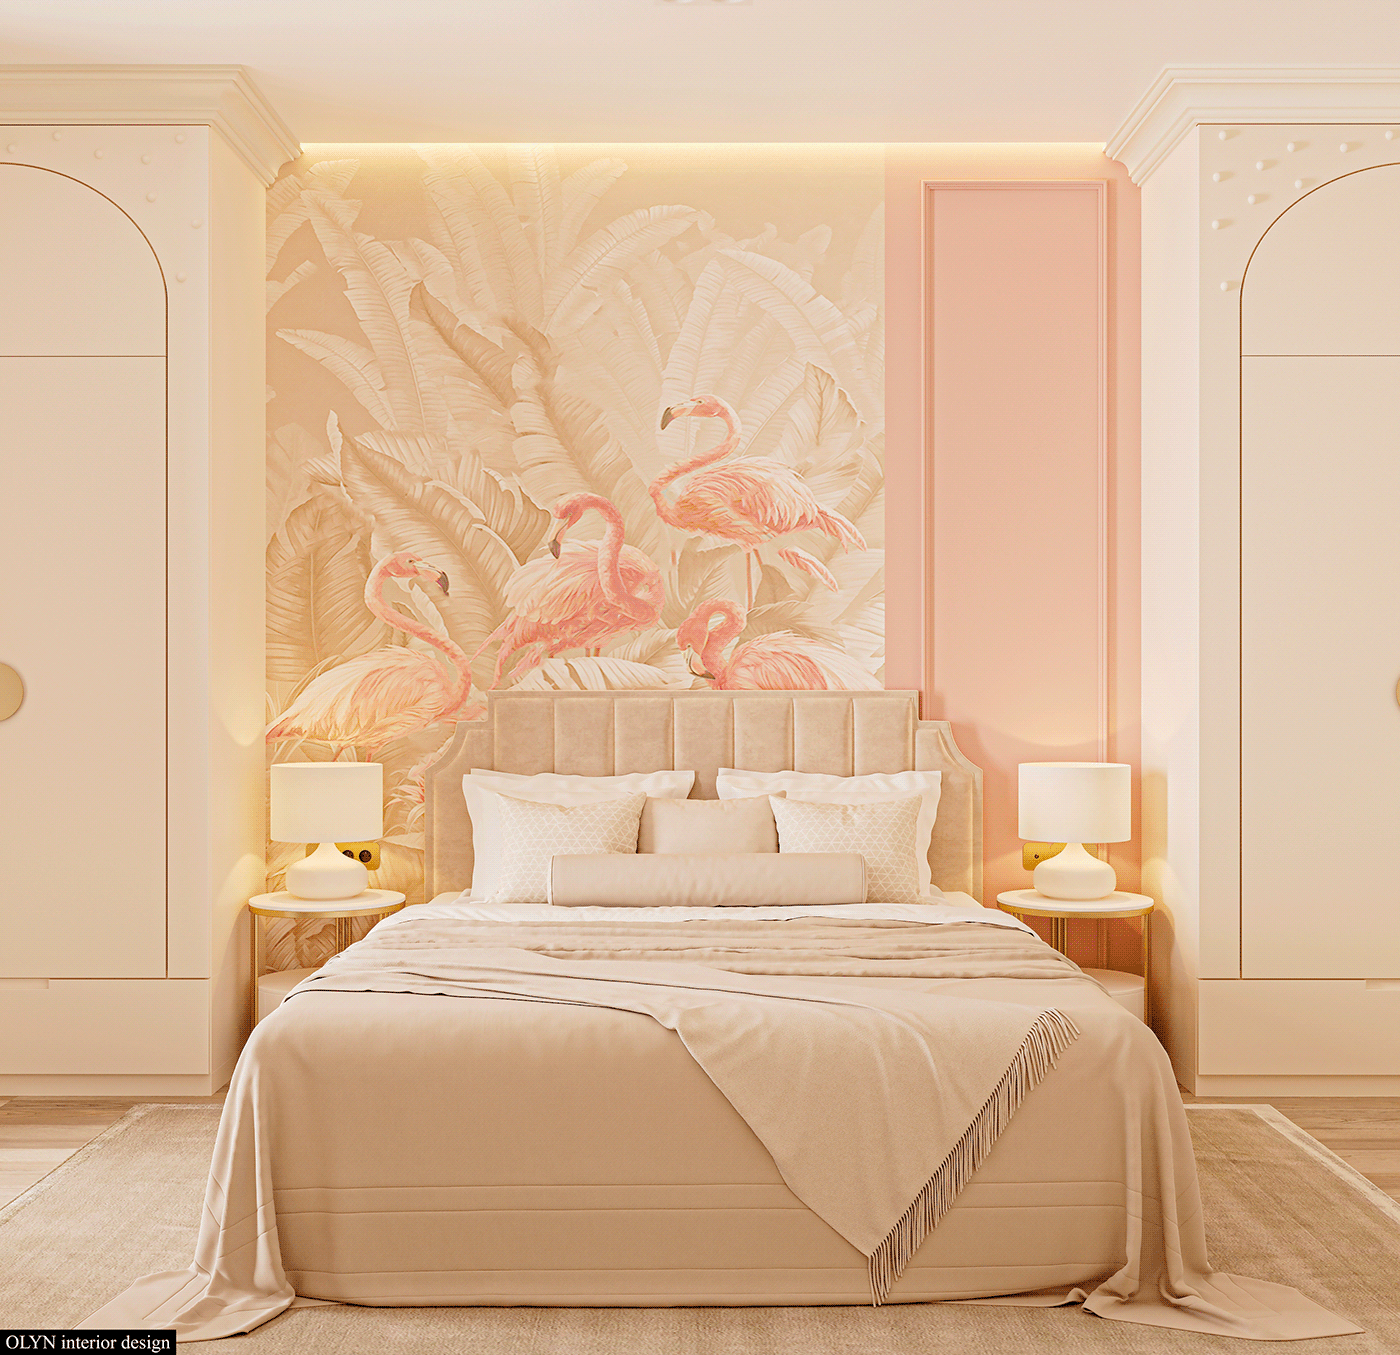 Character design  kidsroom childroom interior design  flamingo pink fantasy modern corona 3ds max